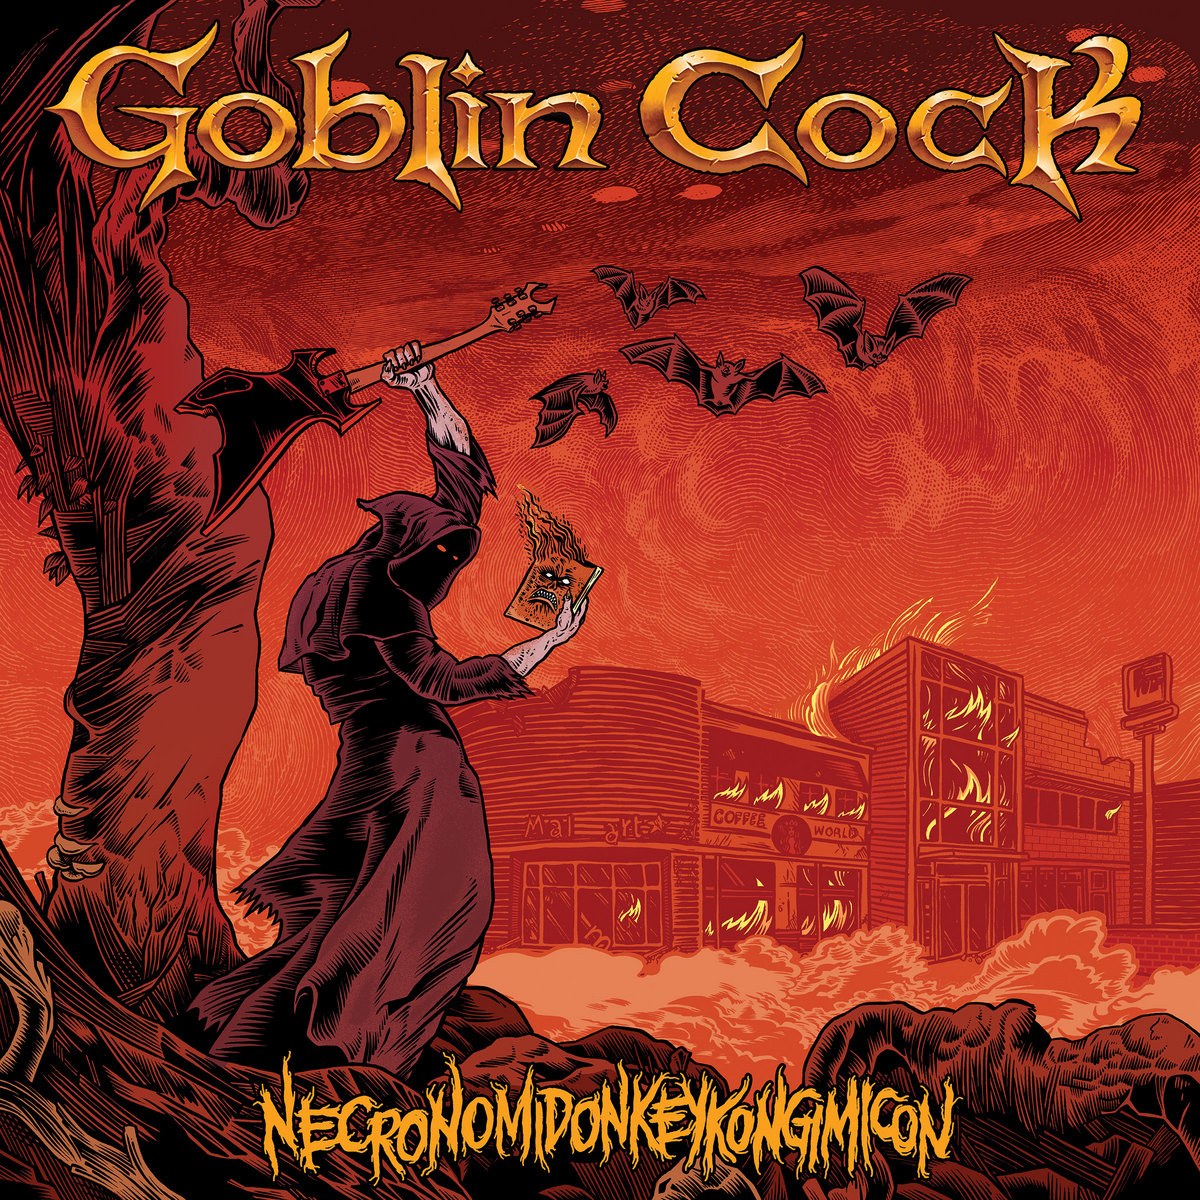 Mad D. reccomend Goblin cock band